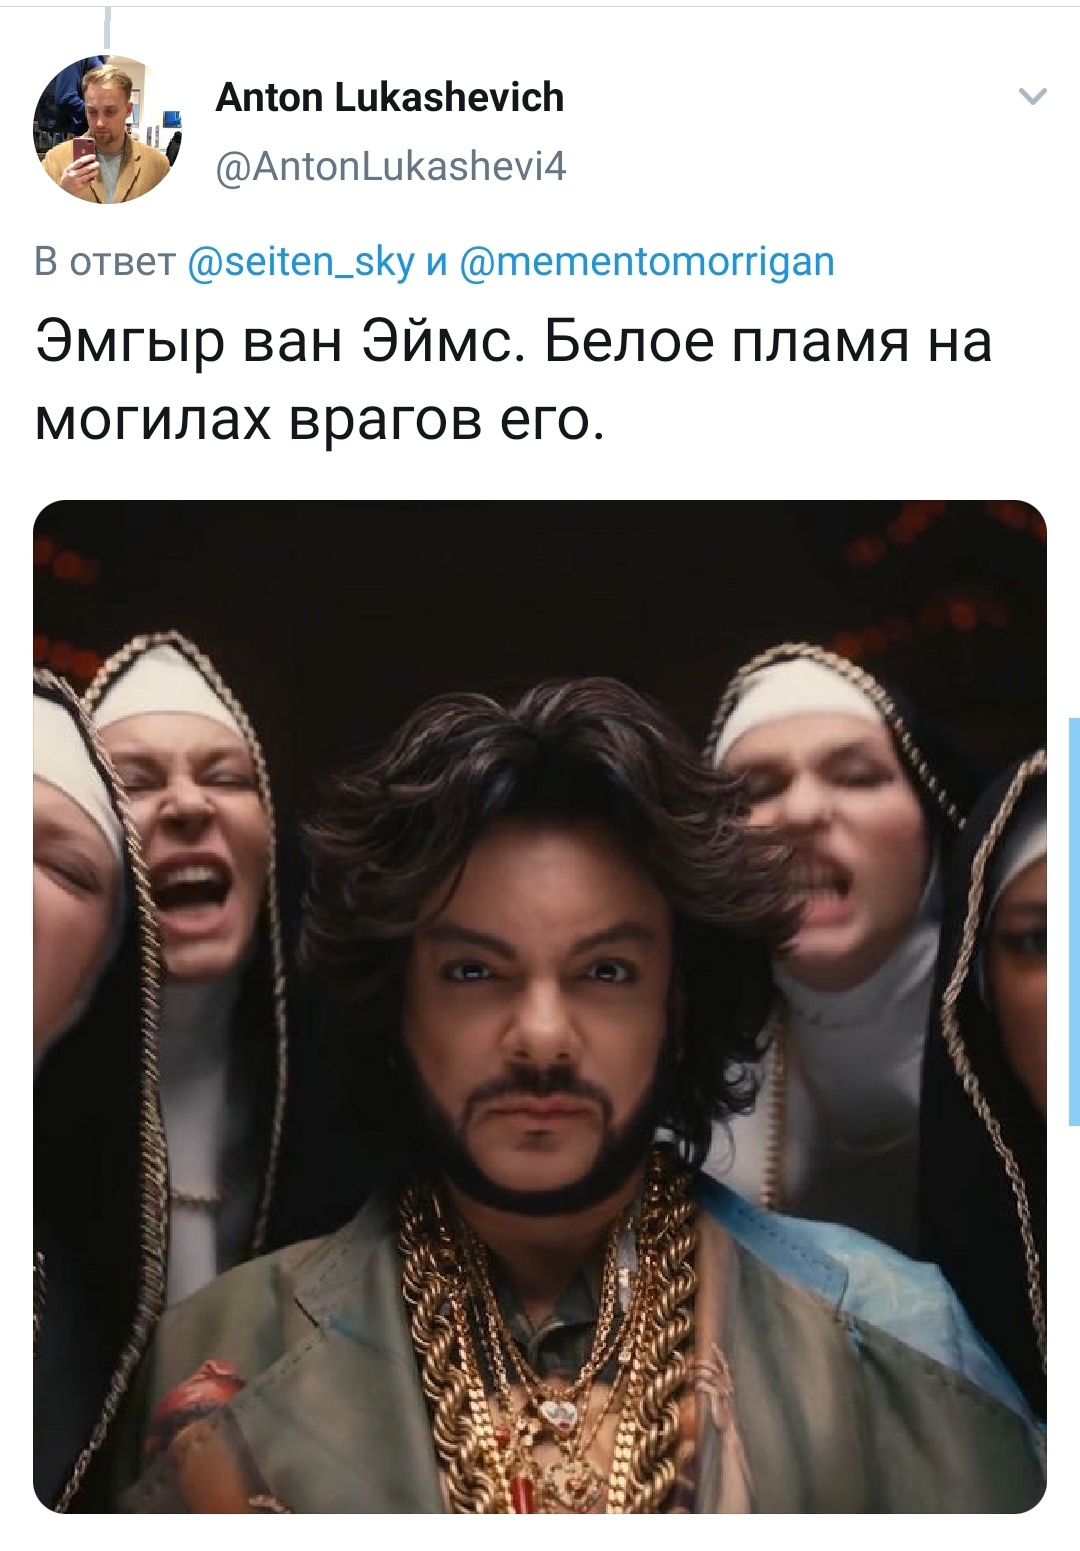 Russian showbiz as Witcher cosplay - Screenshot, Twitter, Witcher, Longpost